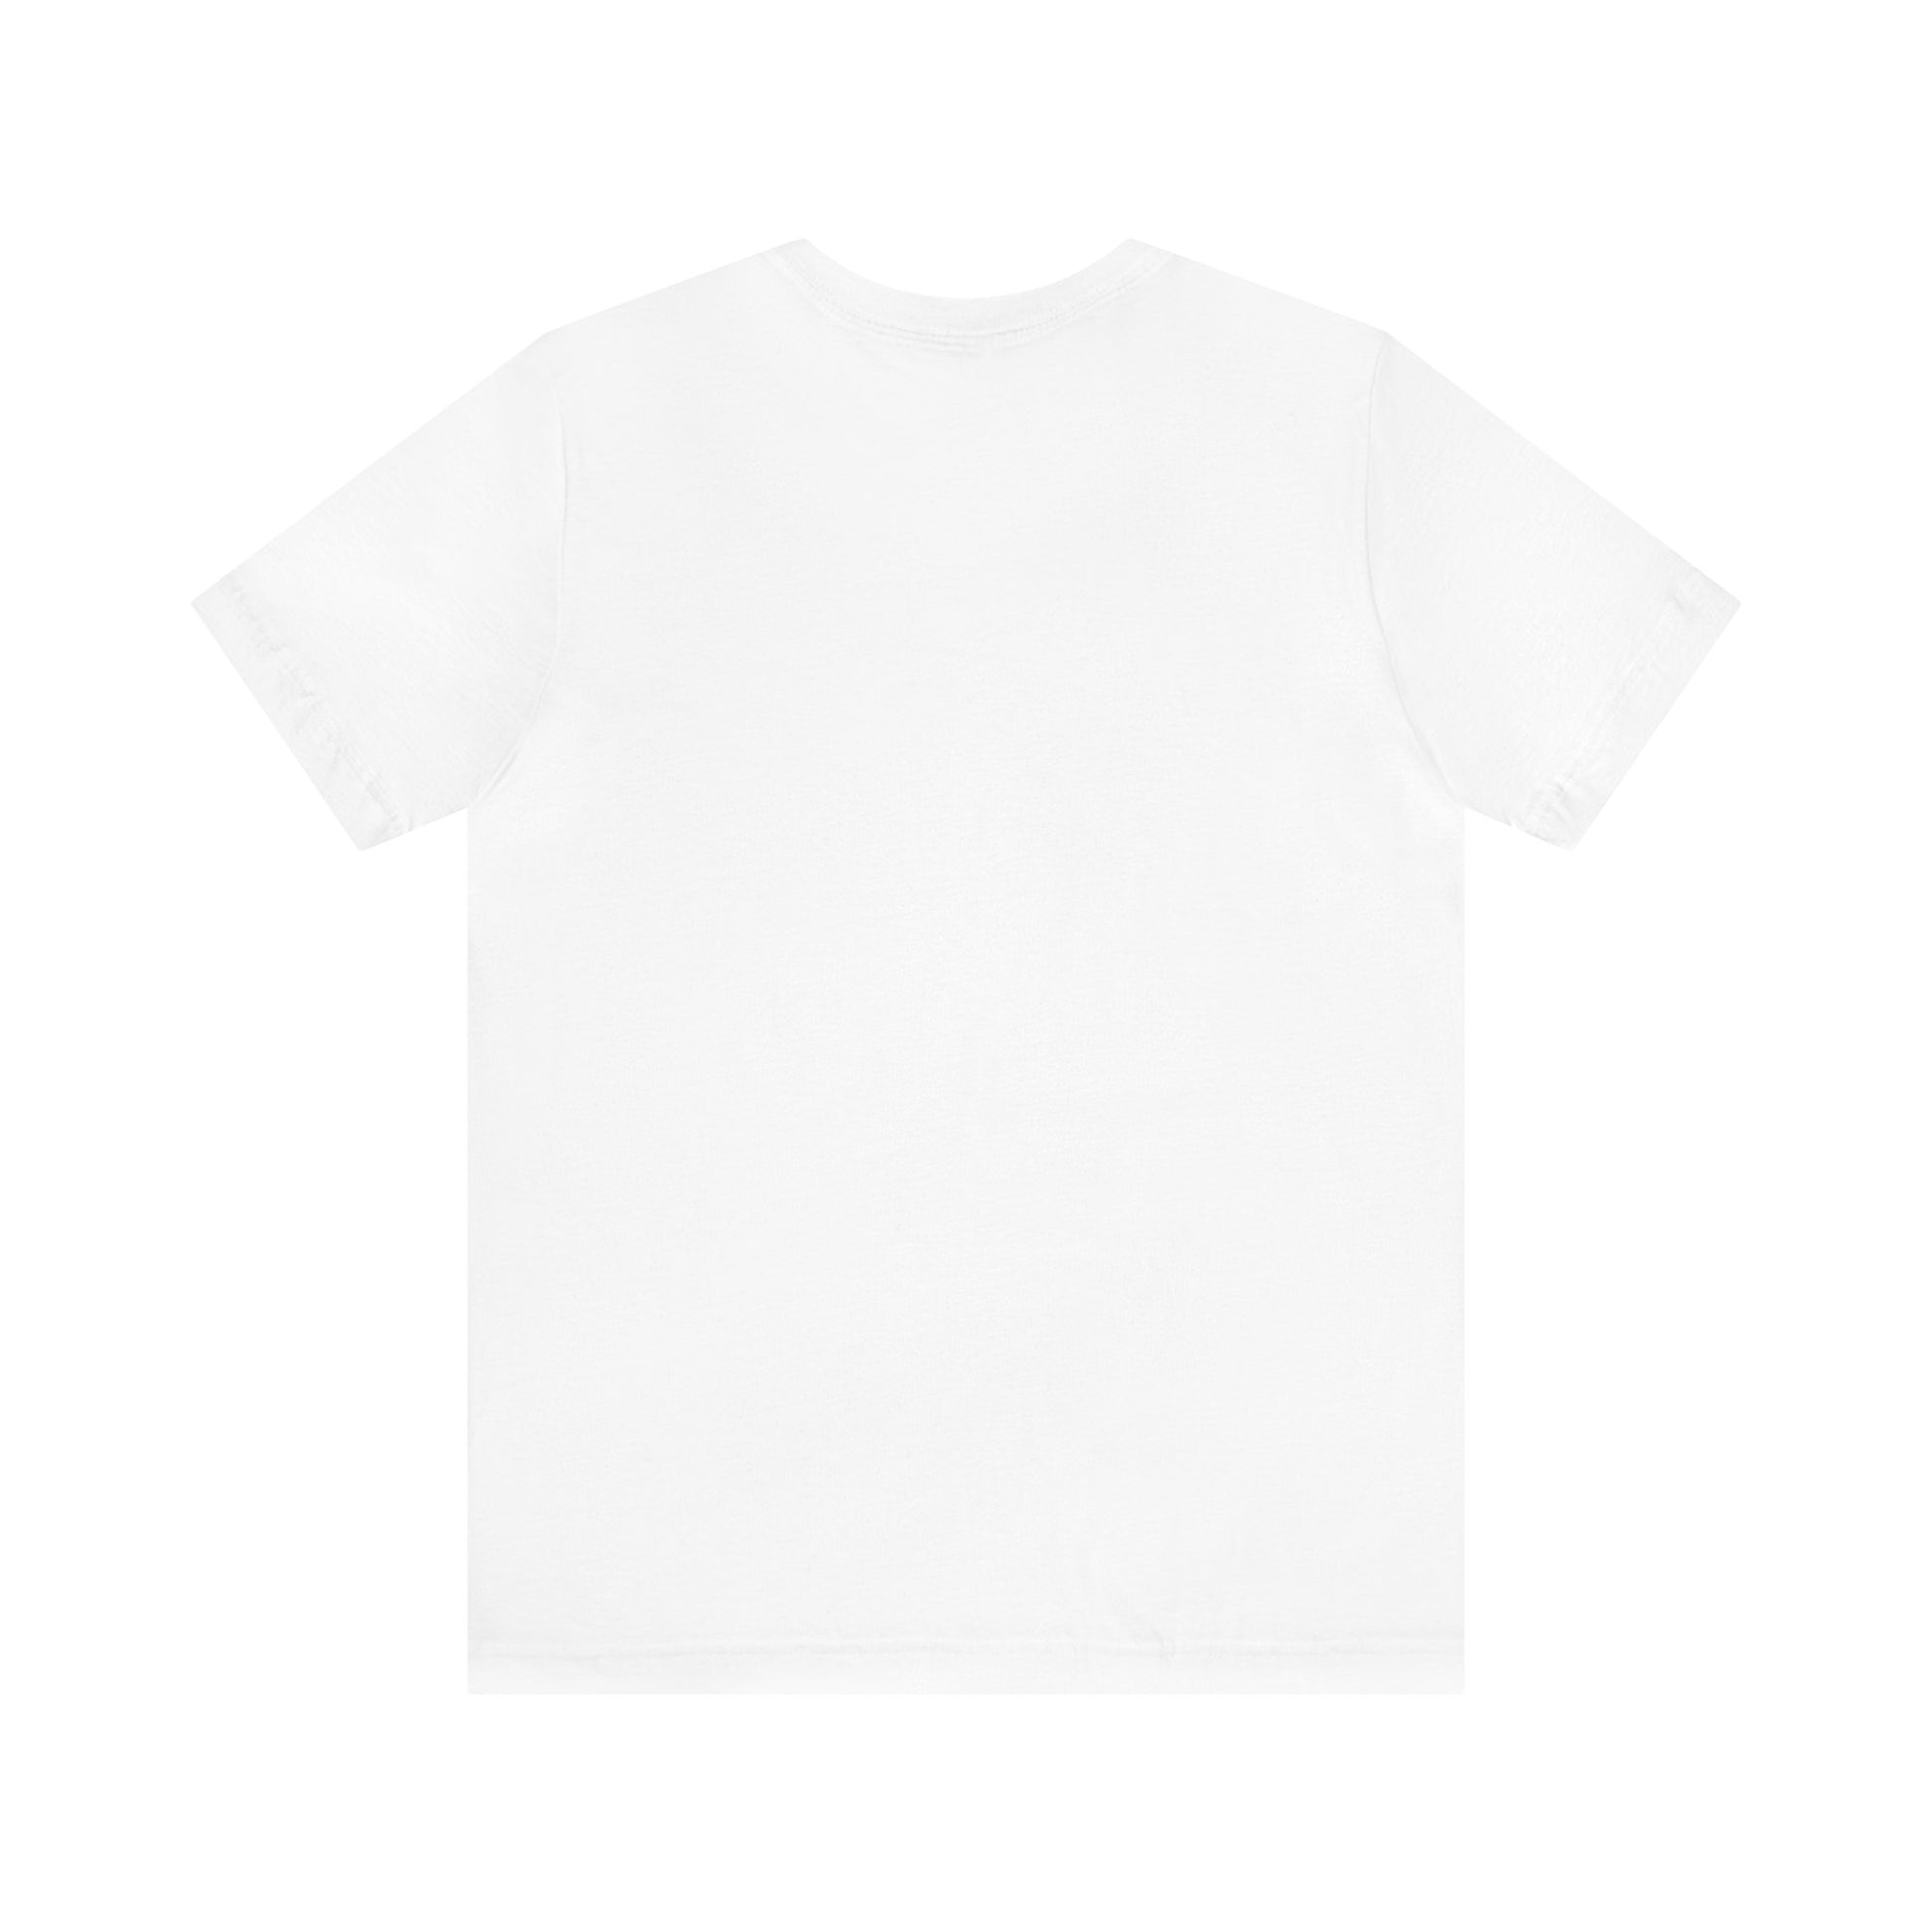 Sarazor ASD T-Shirt